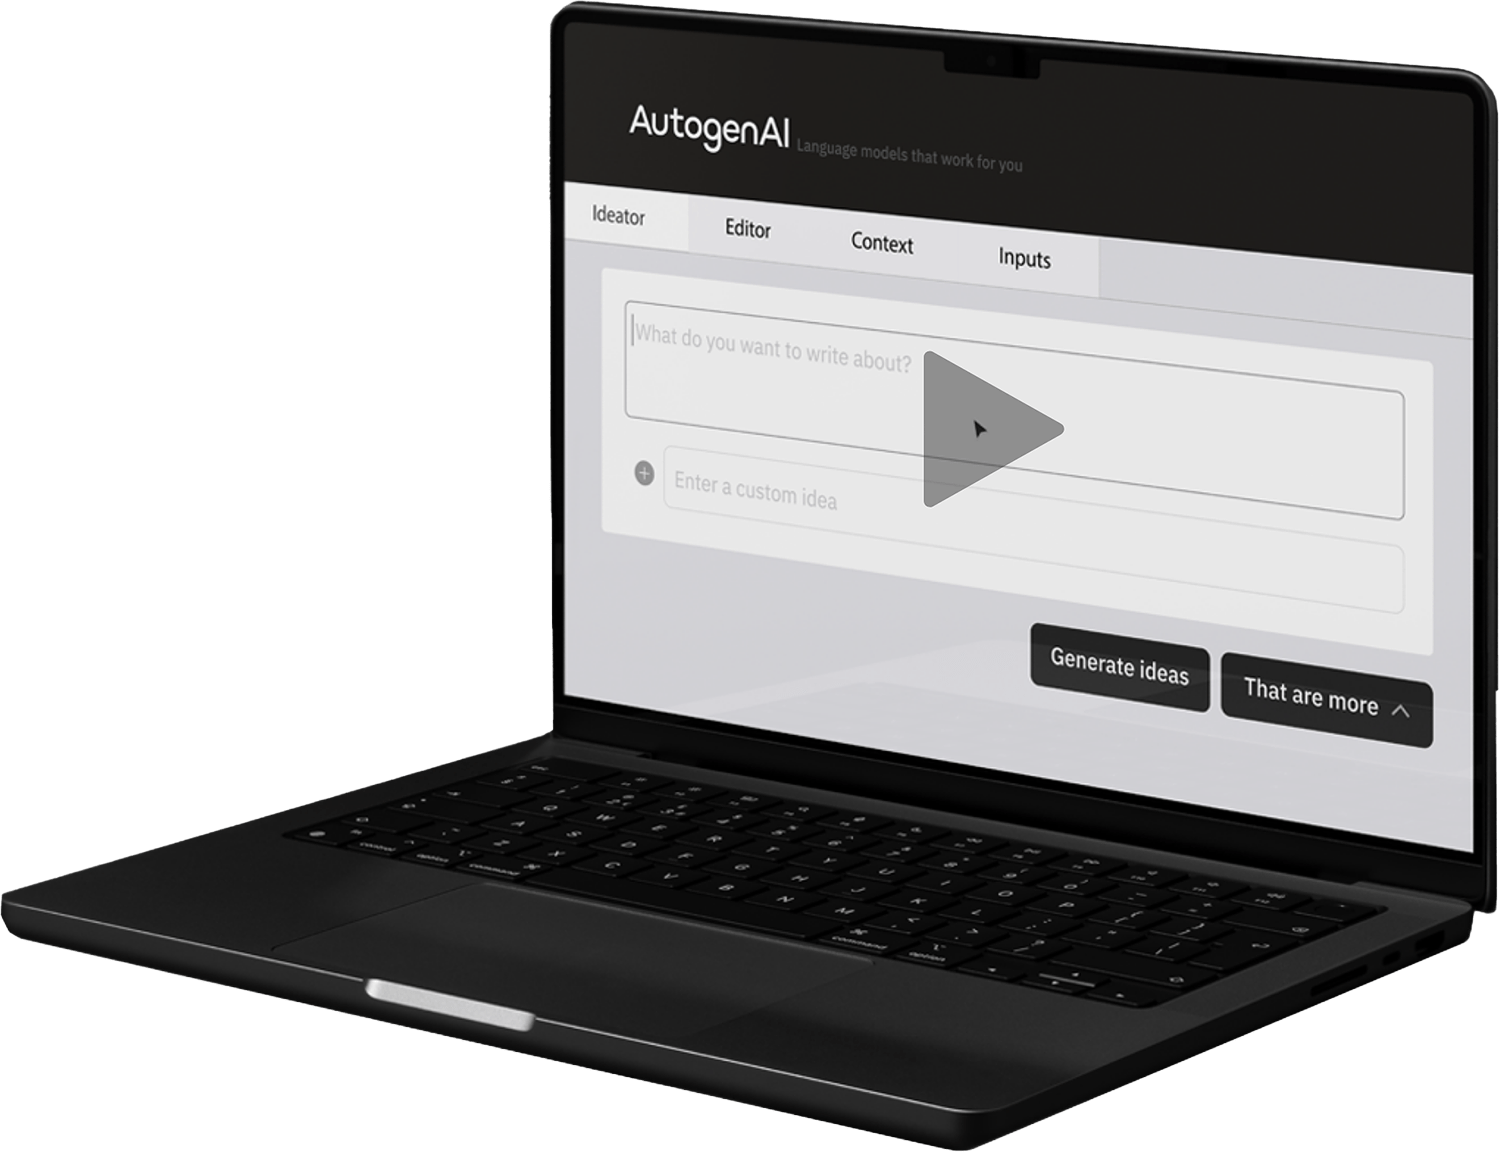 Laptop showing AutogenAI software on Ideator tab